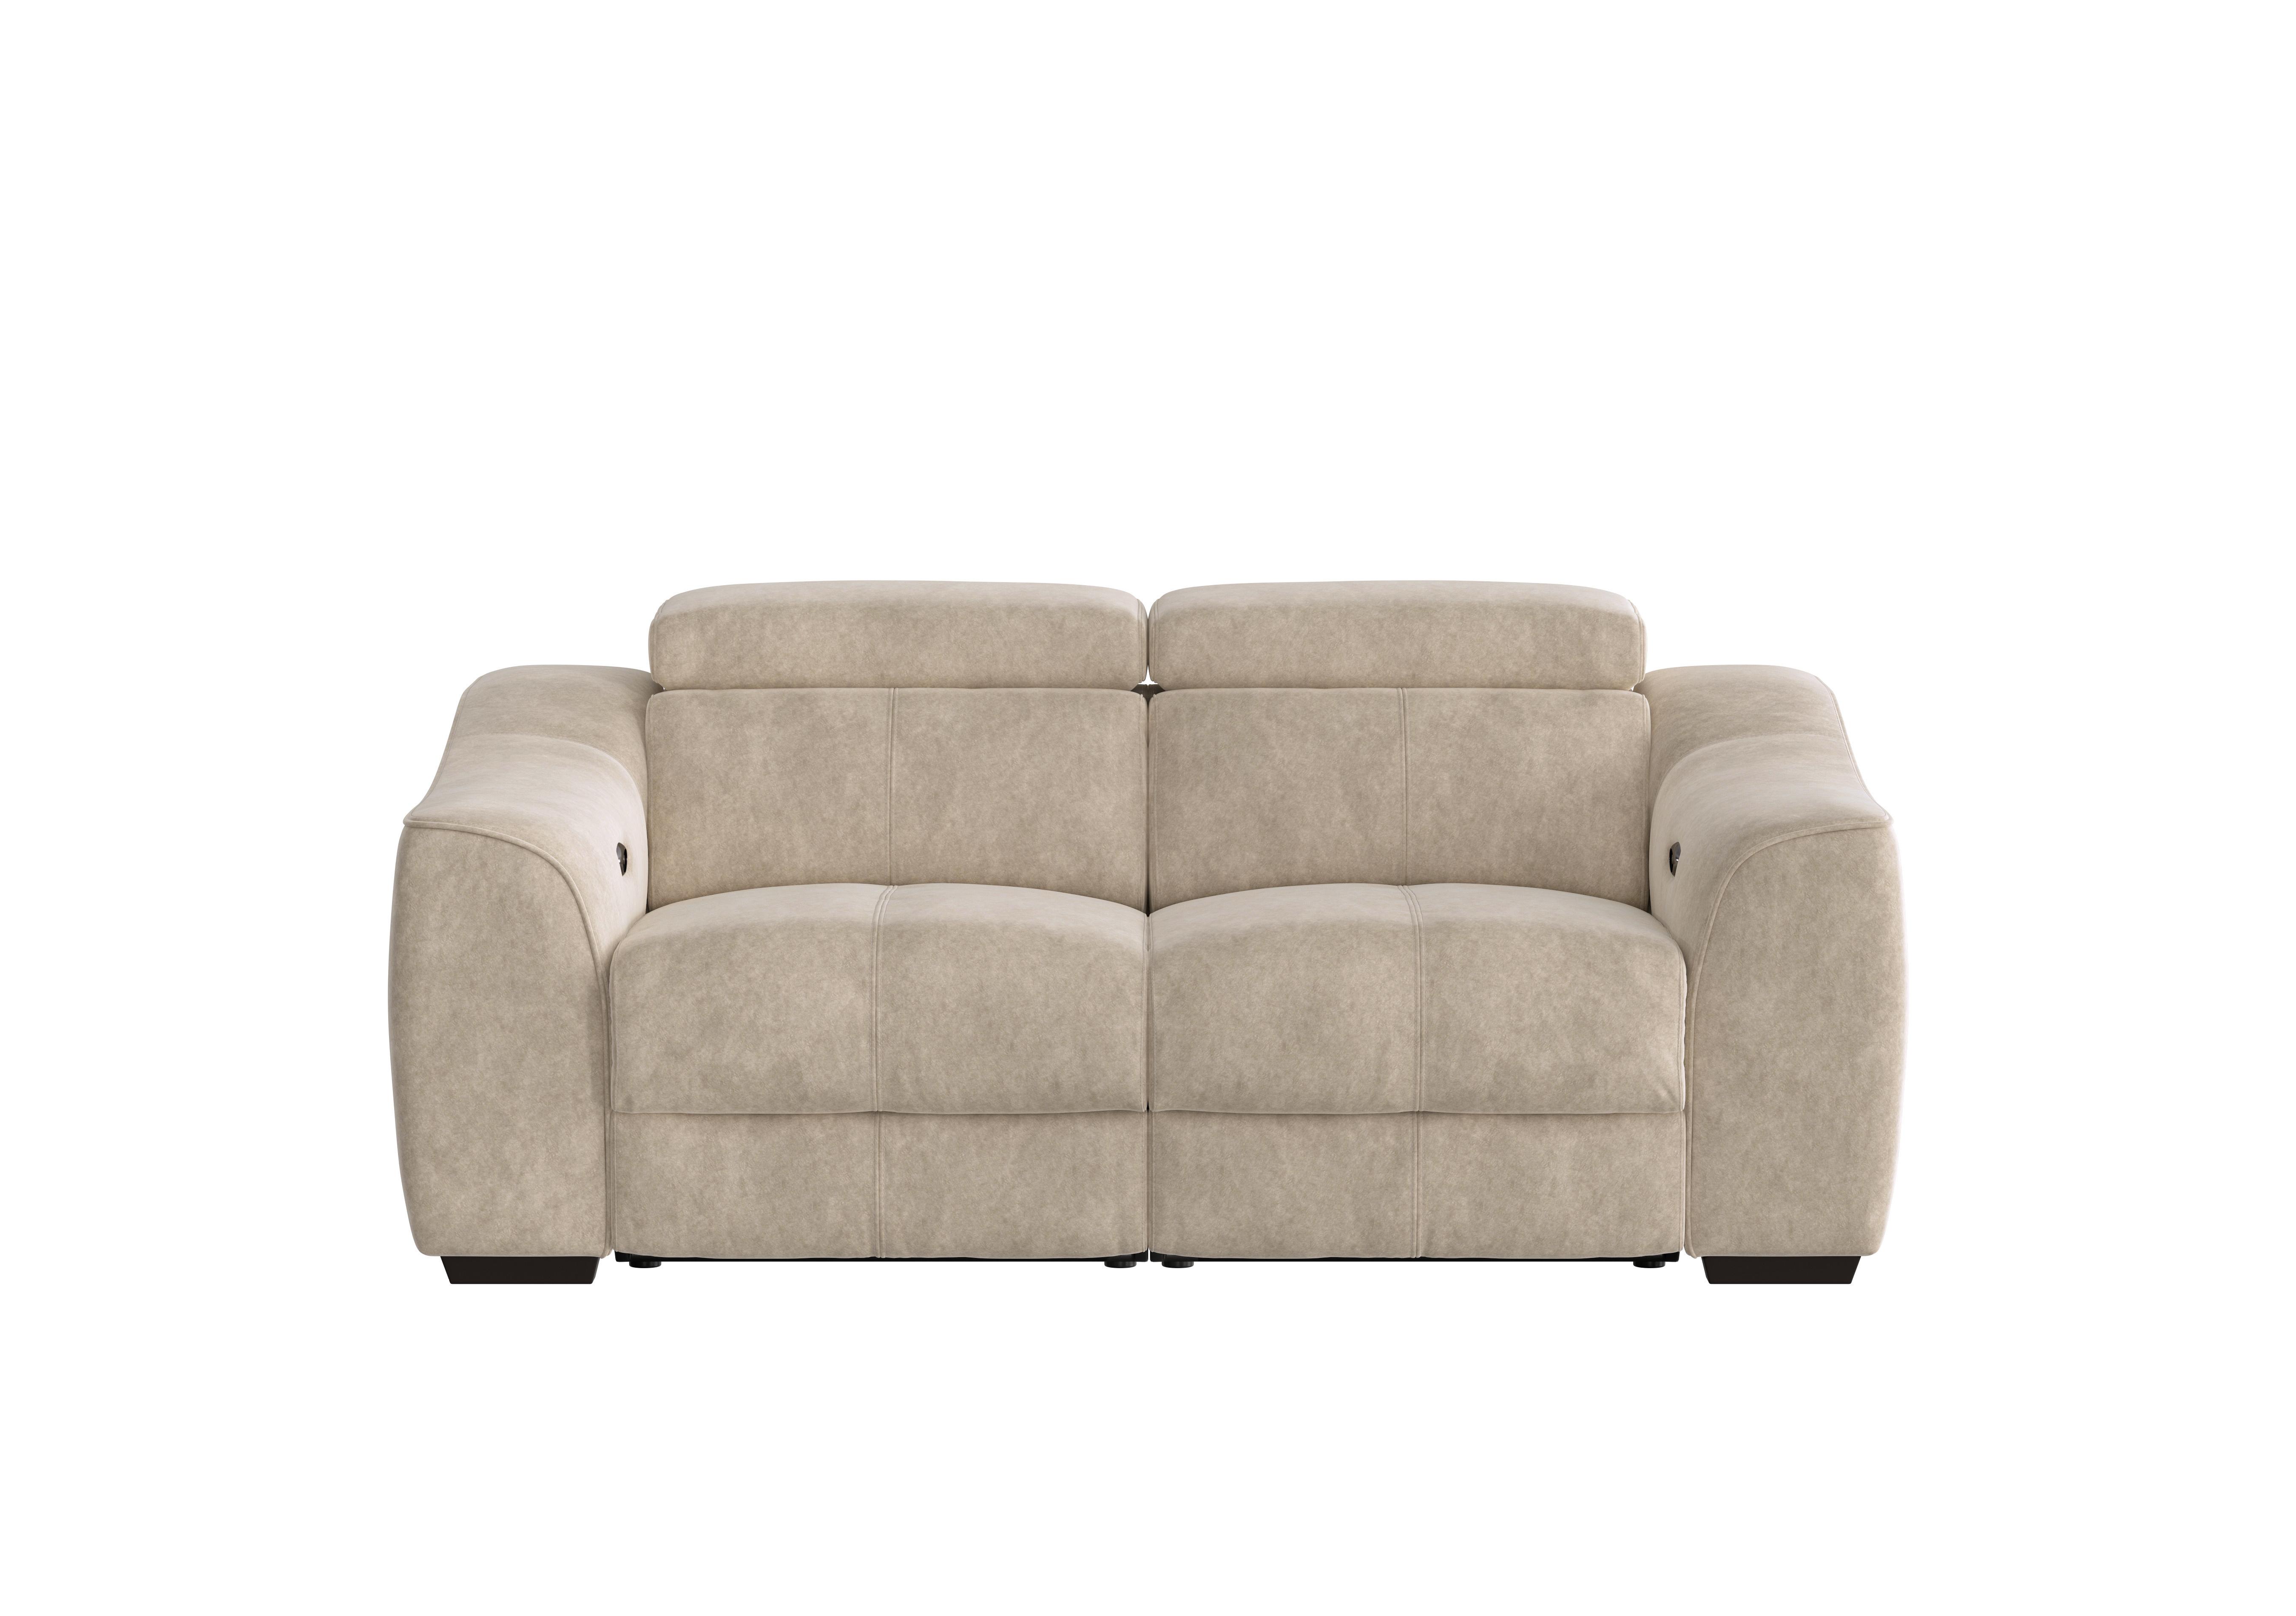 Elixir 2 Seater Fabric Sofa in Bfa-Bnn-R26 Fv2 Cream on Furniture Village